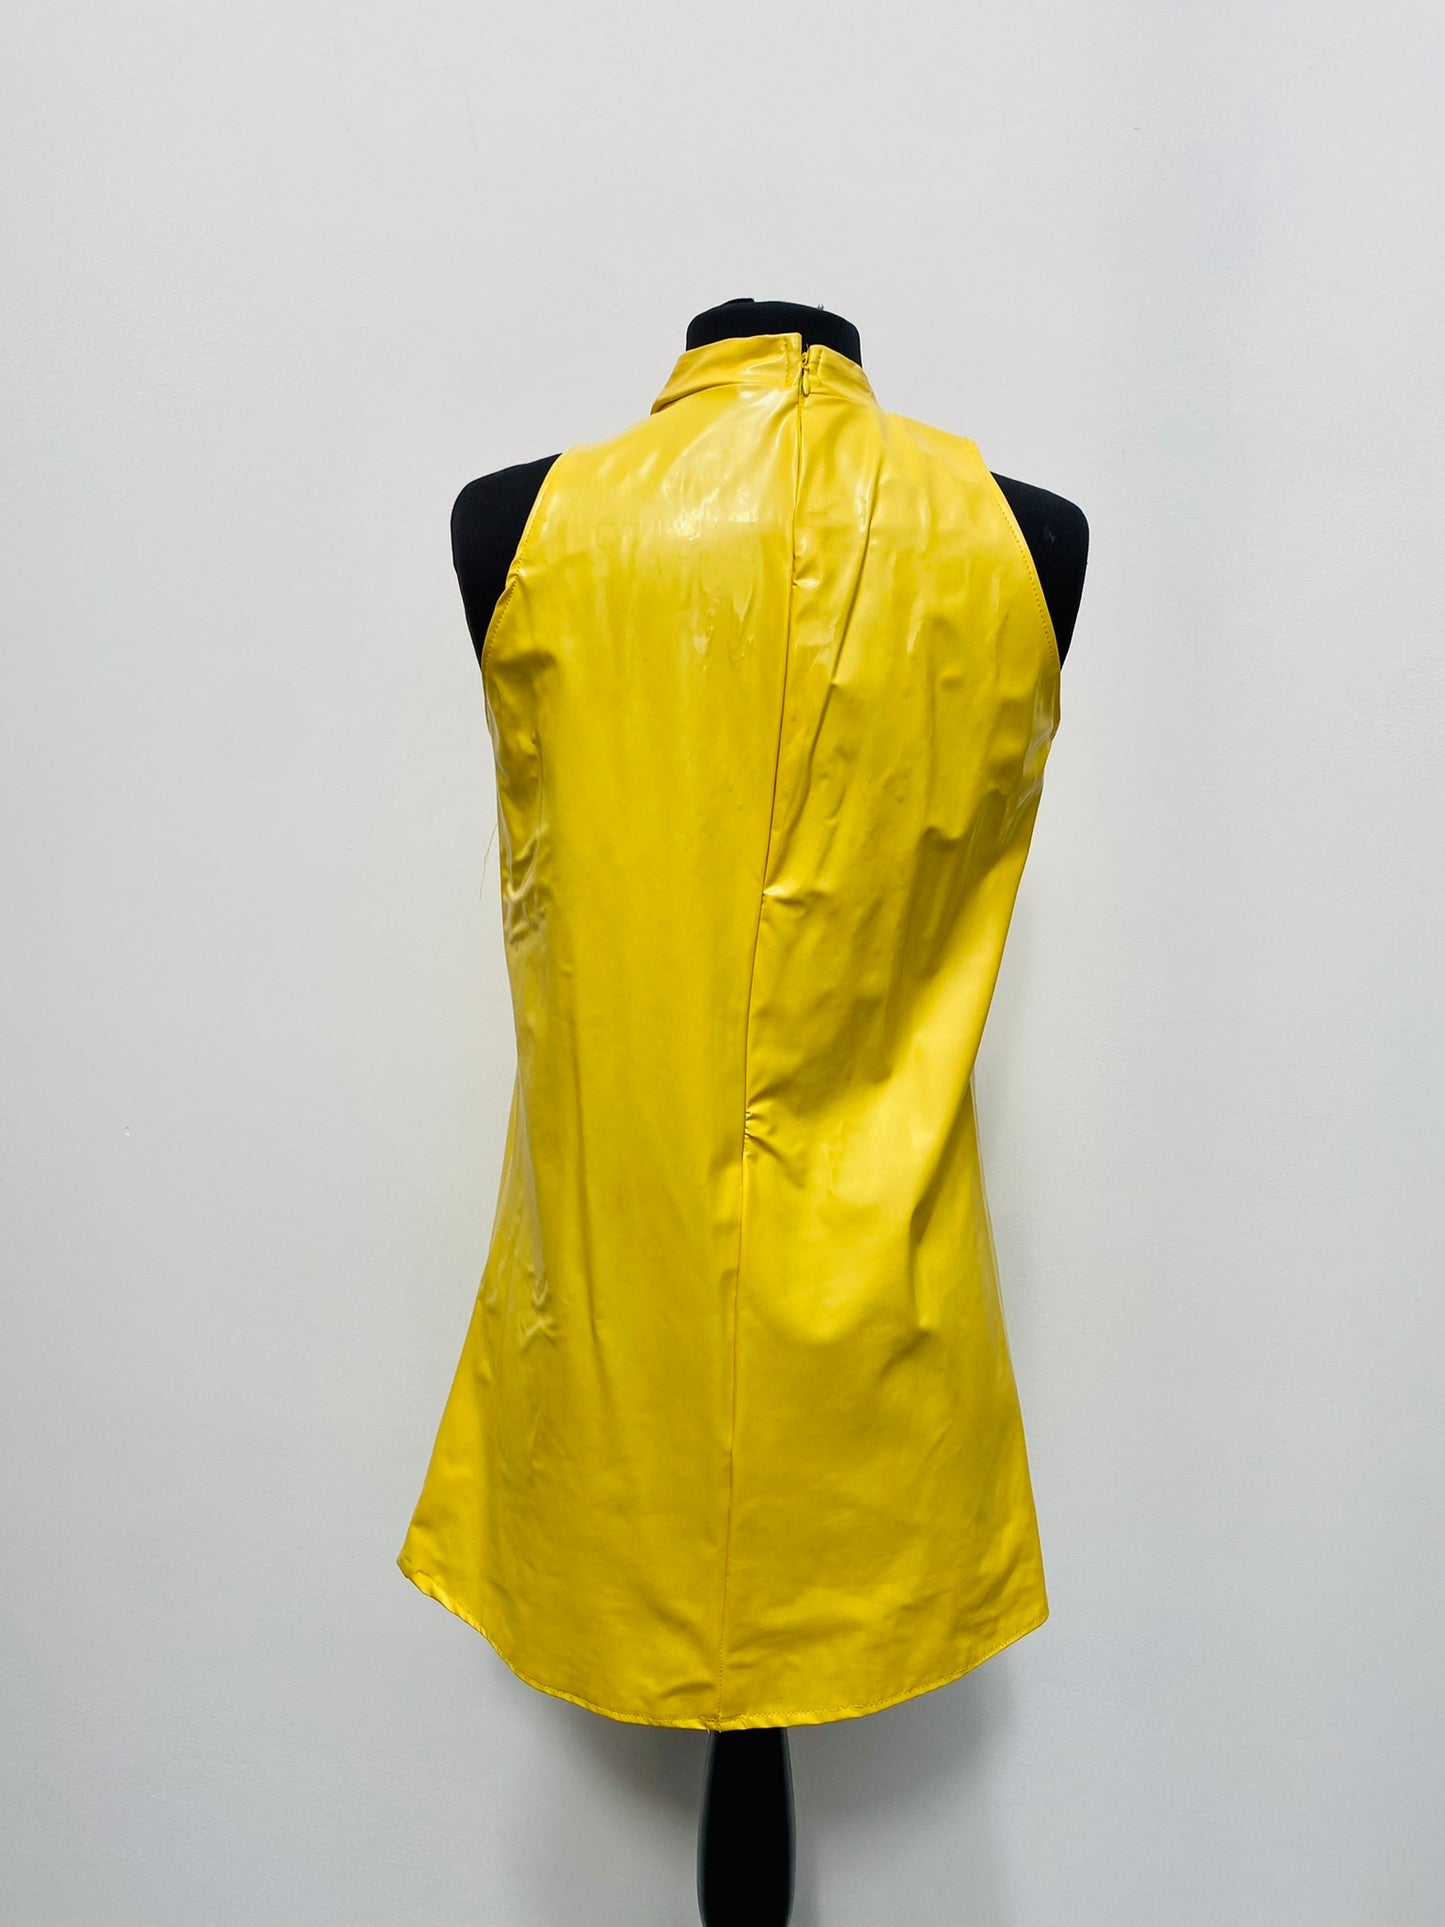 Yellow 60s-70s style mini PVC dress size 10 - Ex Hire Fancy Dress Costume